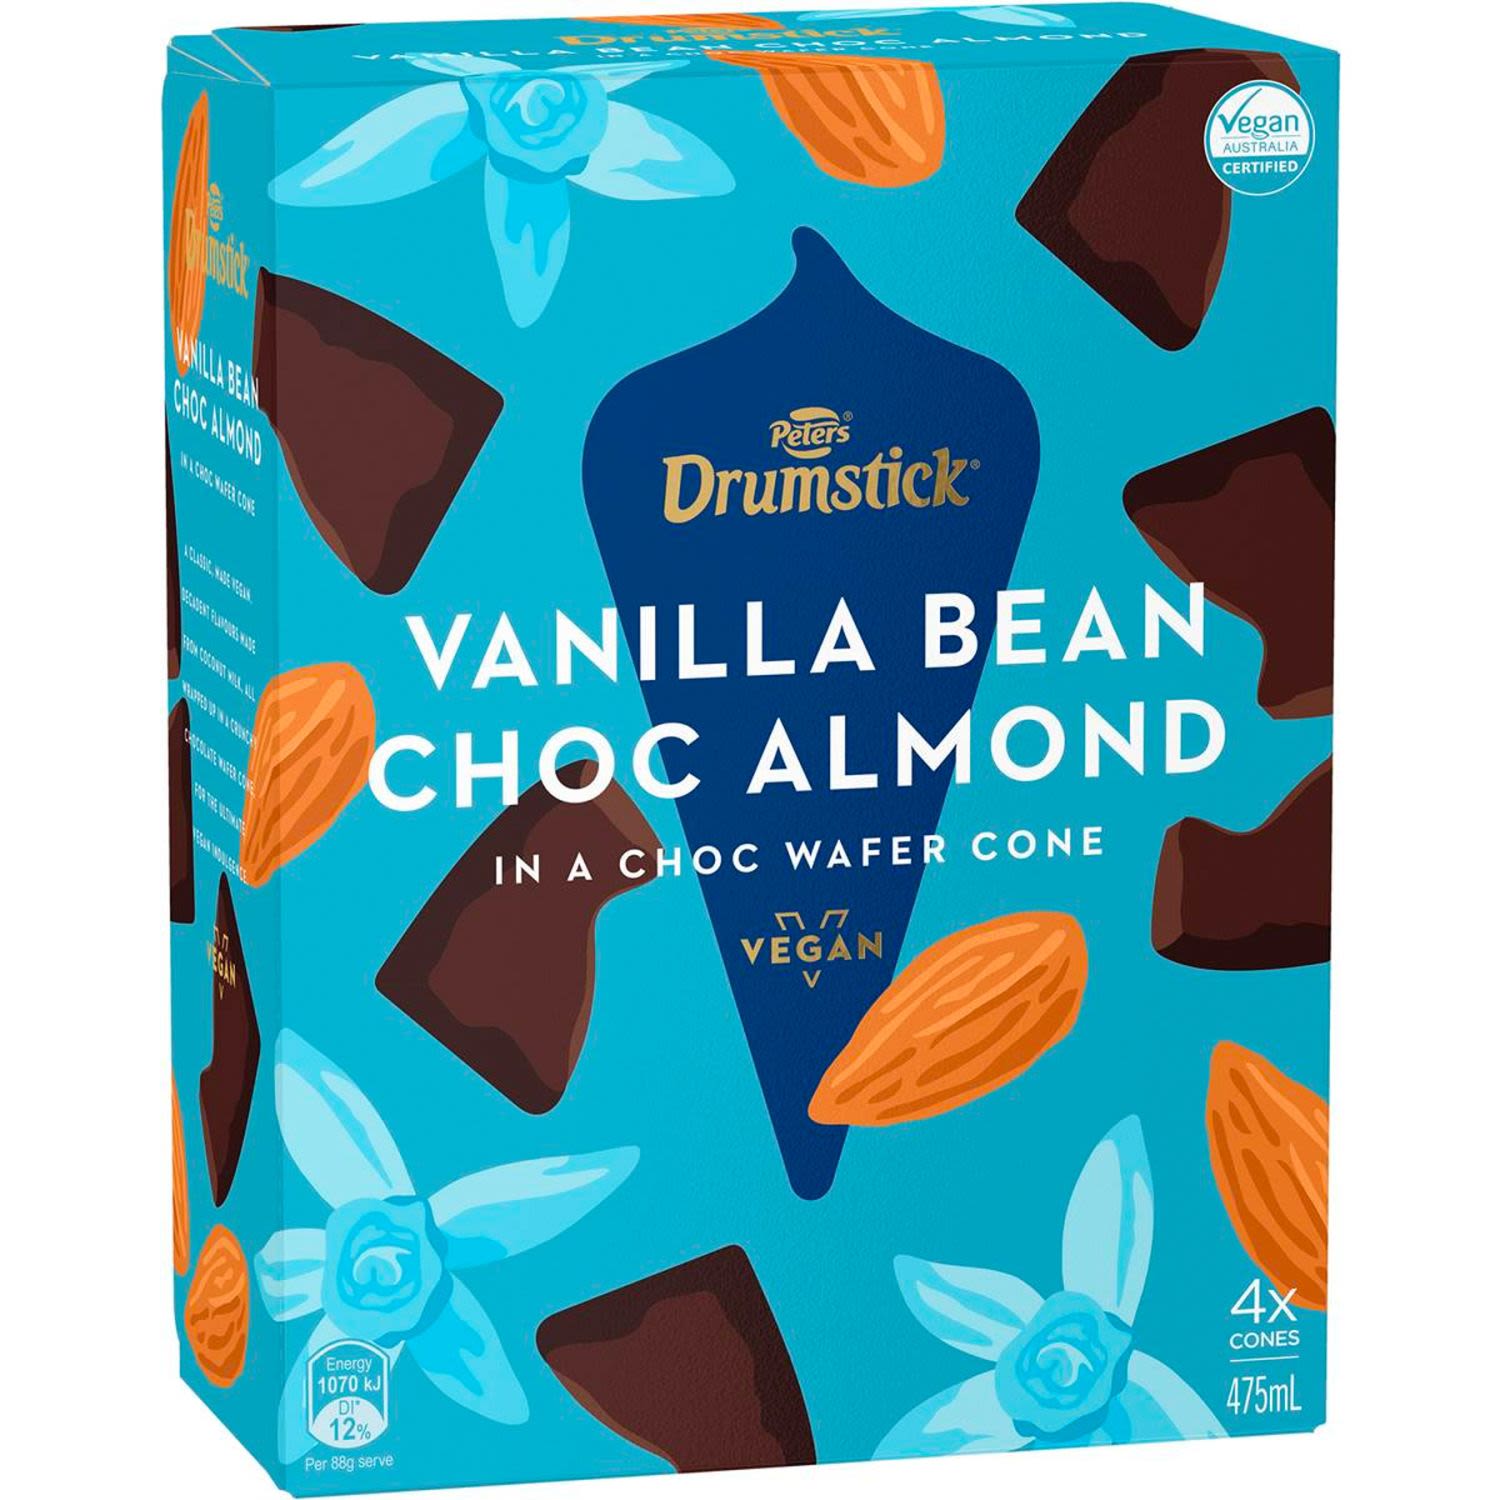 Peters Drumstick Vegan Vanilla Bean Choc Almond Cones, 4 Each